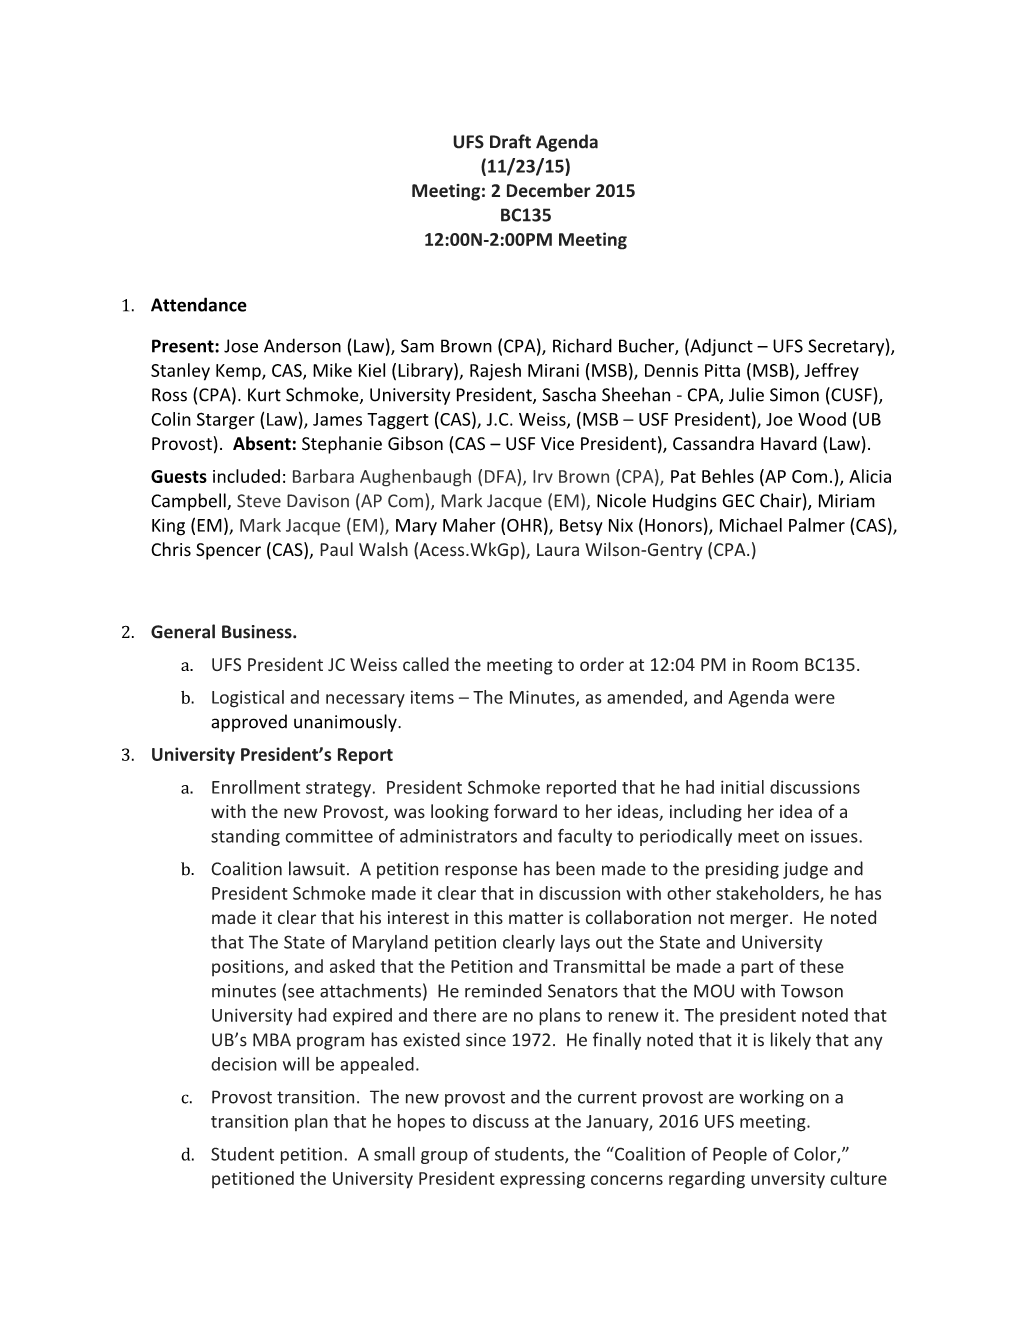 UFS Draft Agenda (11/23/15) Meeting: 2 December 2015 BC135 12:00N-2:00PM Meeting